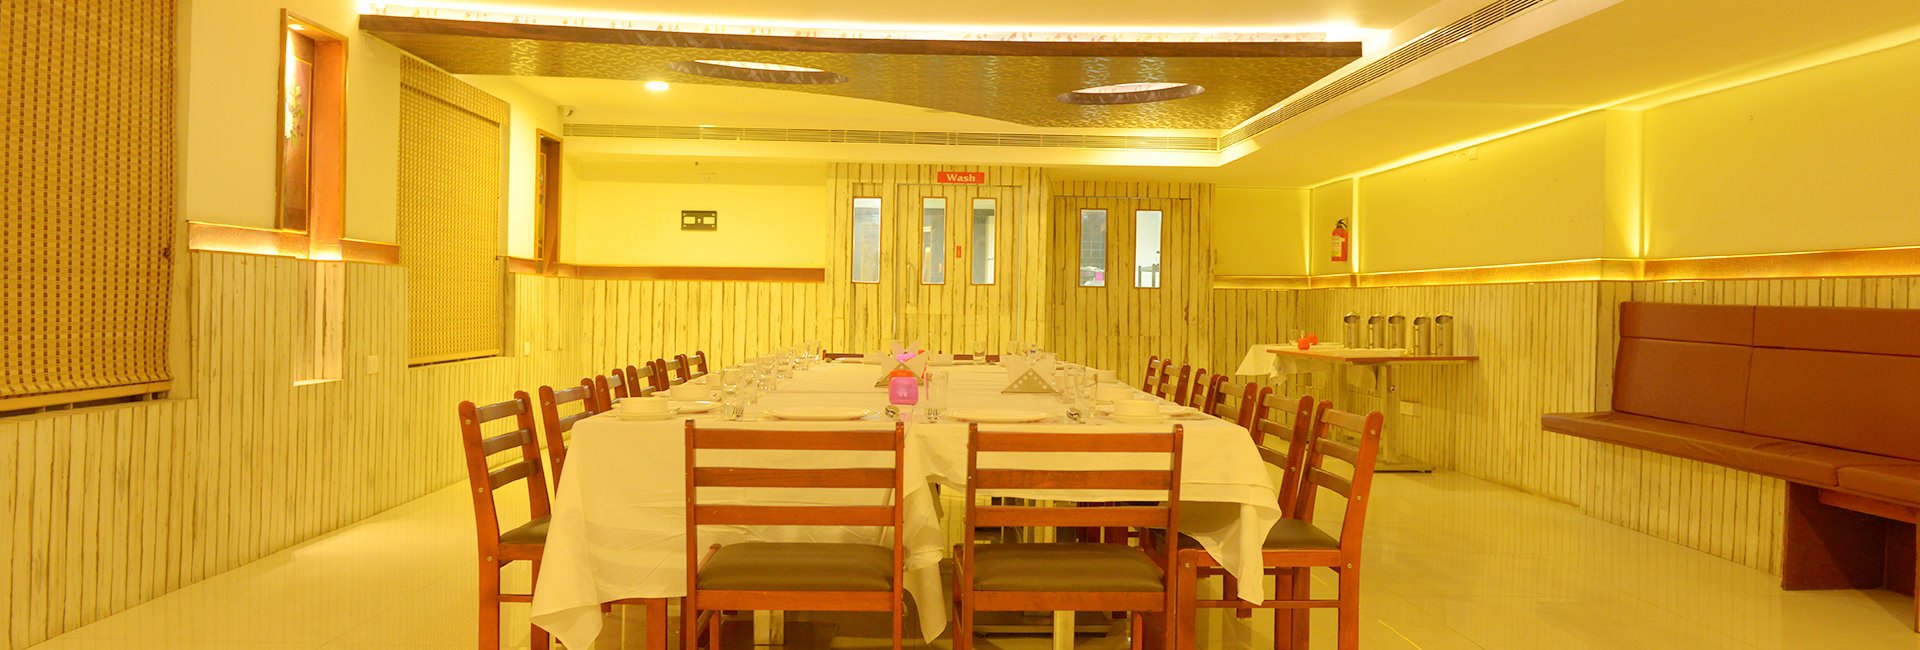 Banquet Hall in yelagiri